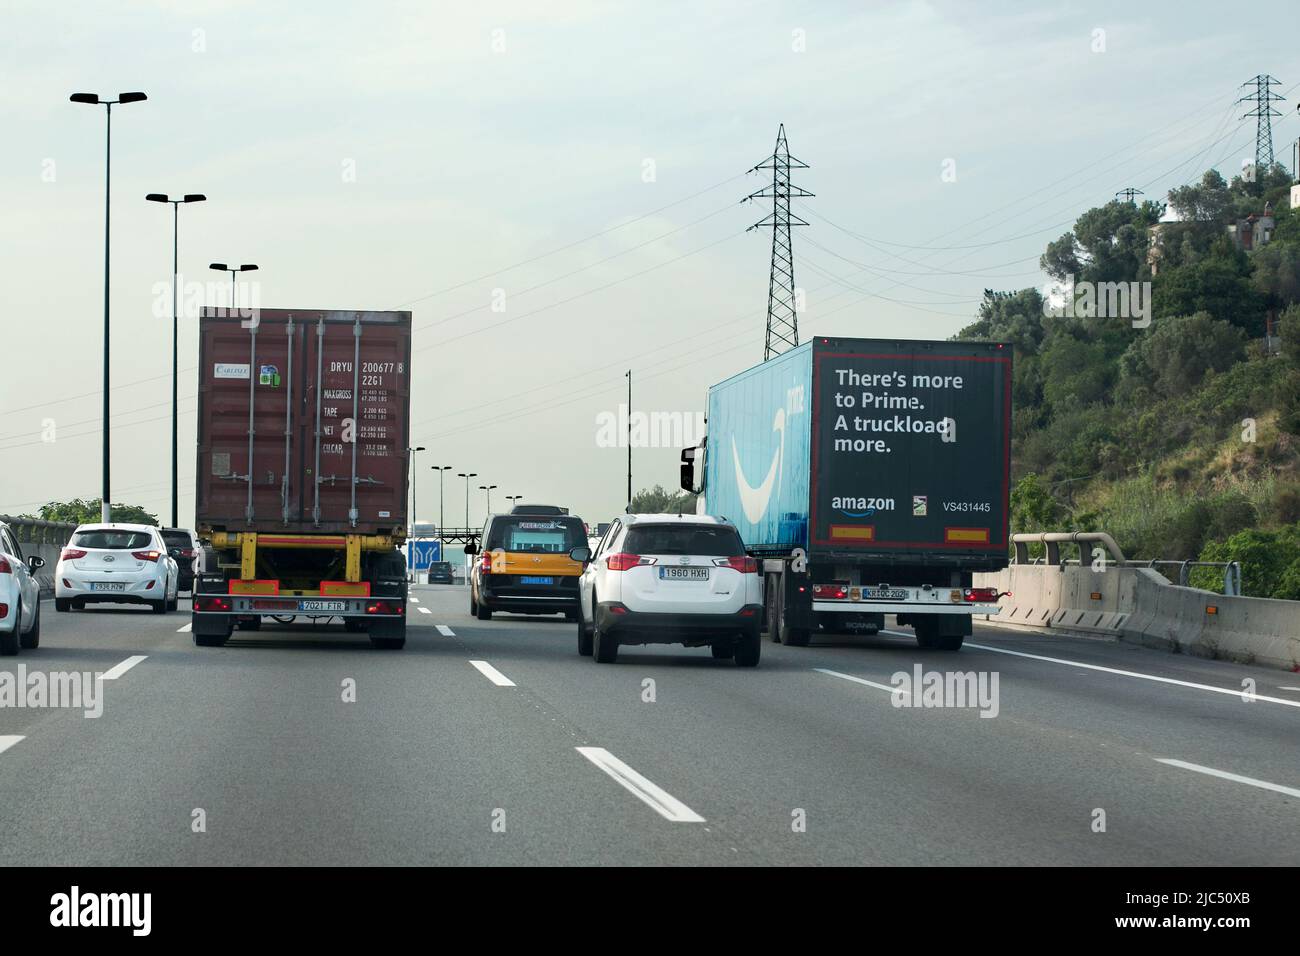 Amazon prime lorry, Barcelona, Spain. Stock Photo